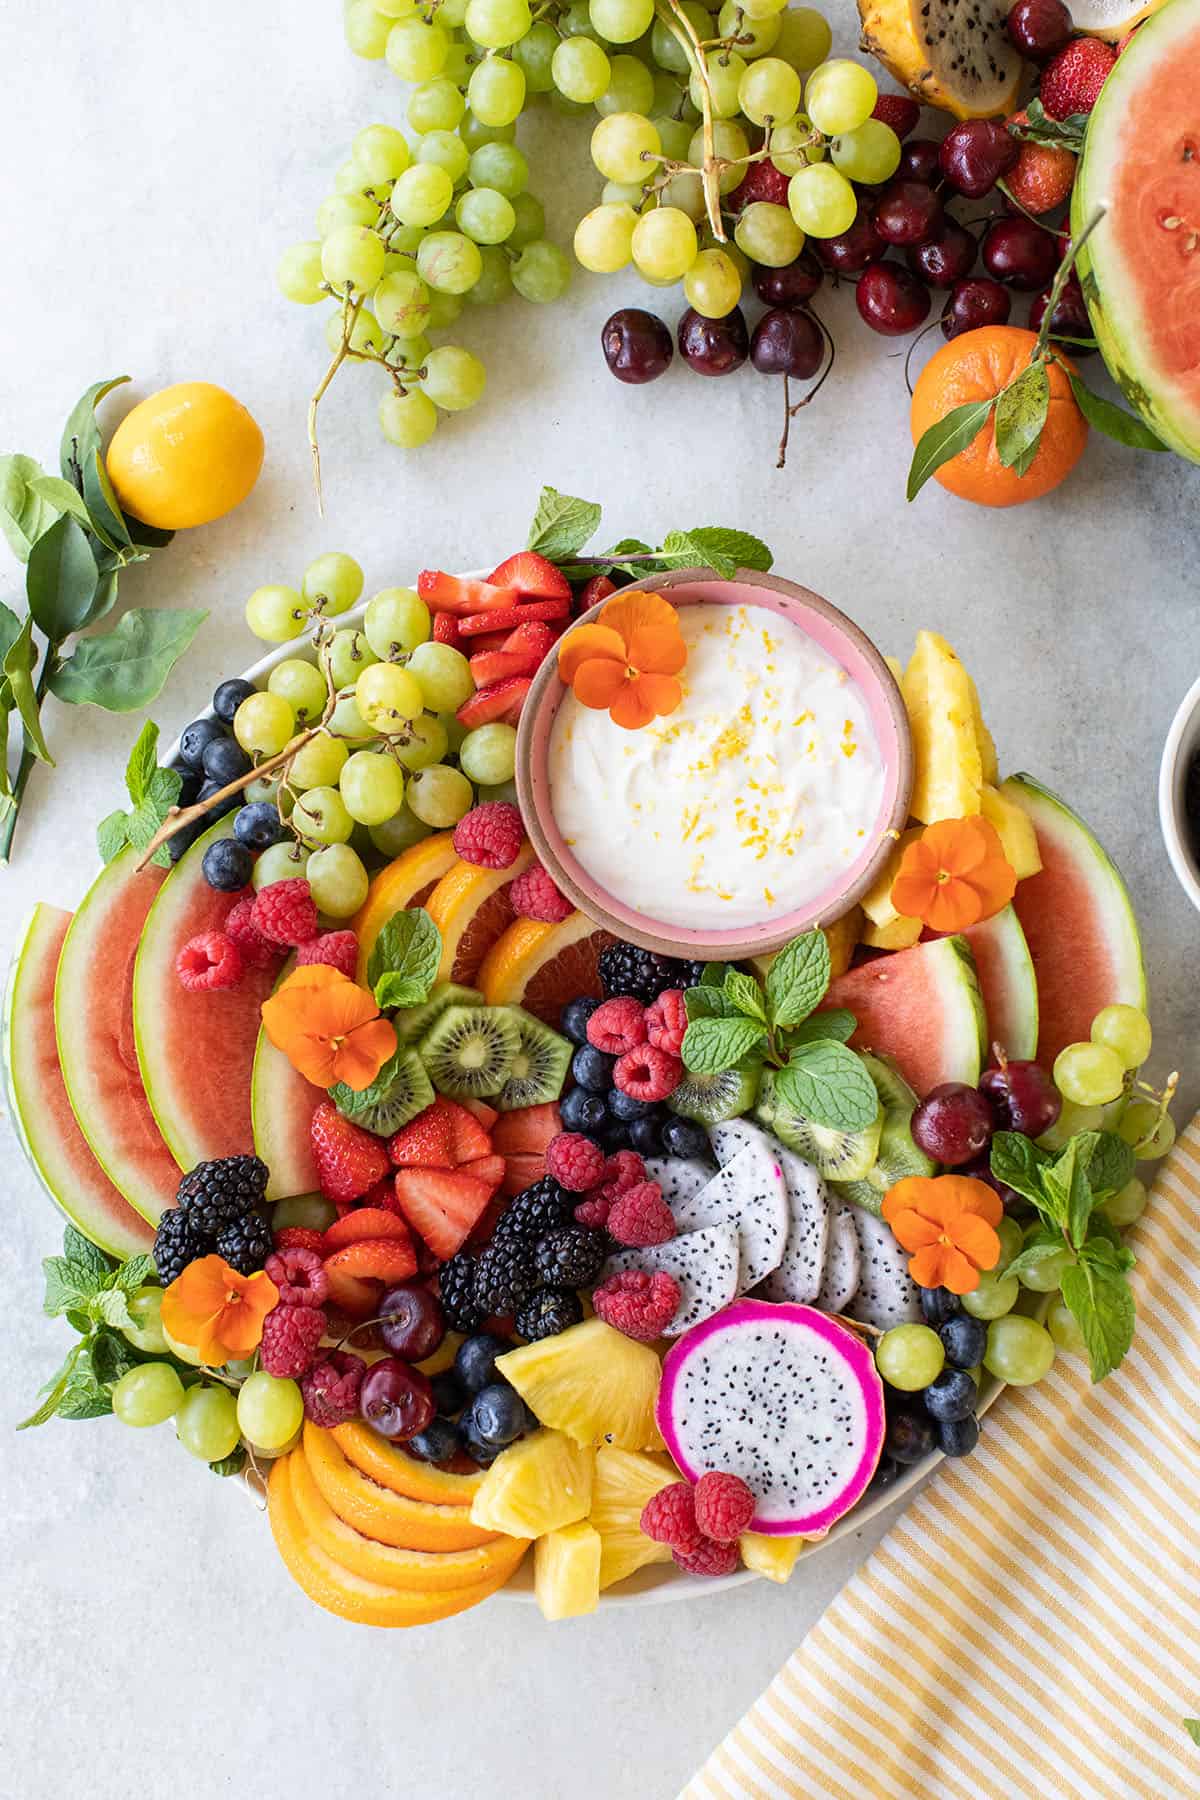 The most beautiful fruit platter.